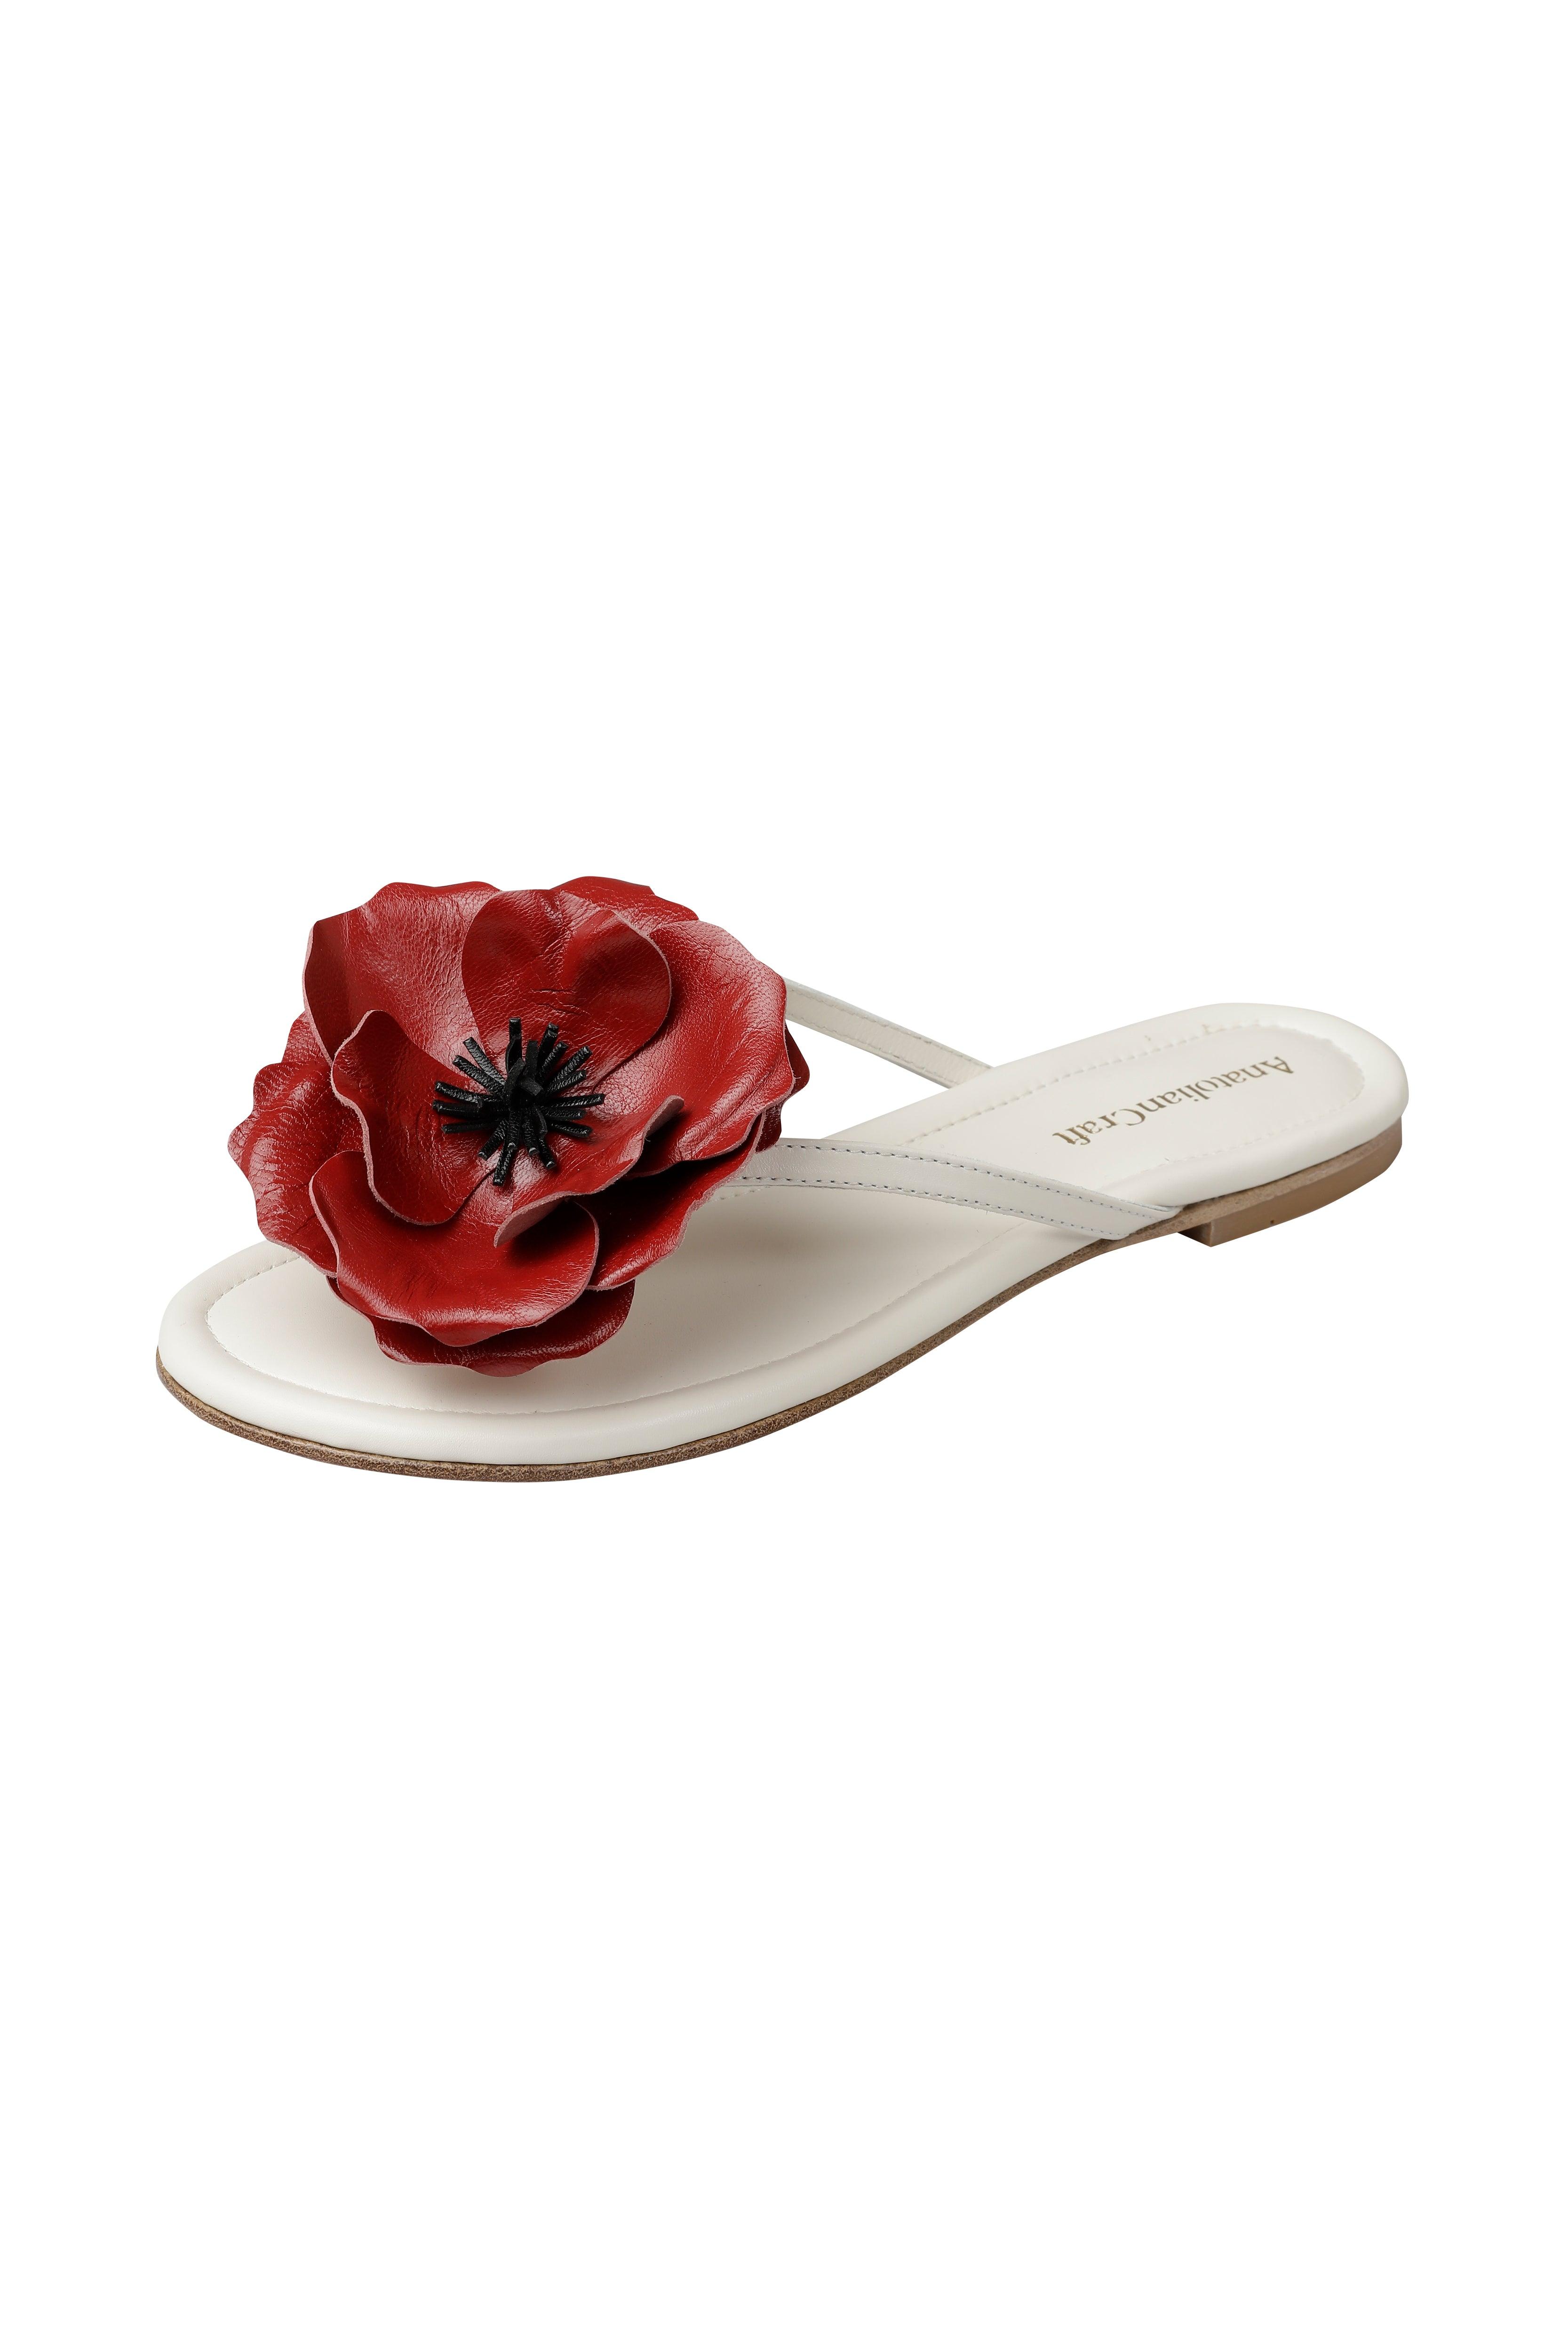 Whispering Poppies - Leather Flip Flops - AnatolianCraft